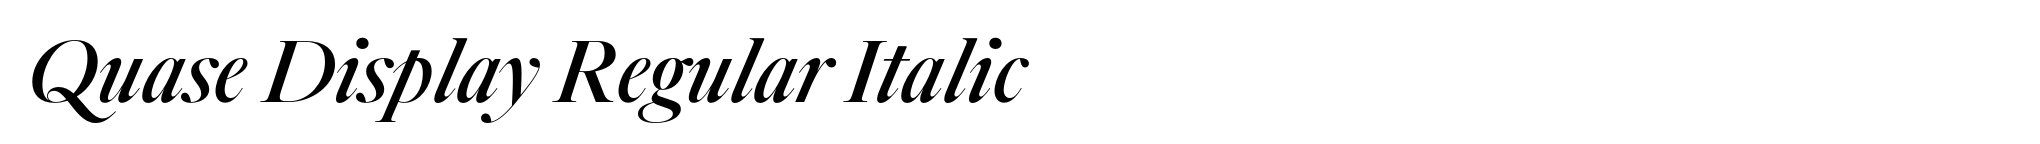 Quase Display Regular Italic image